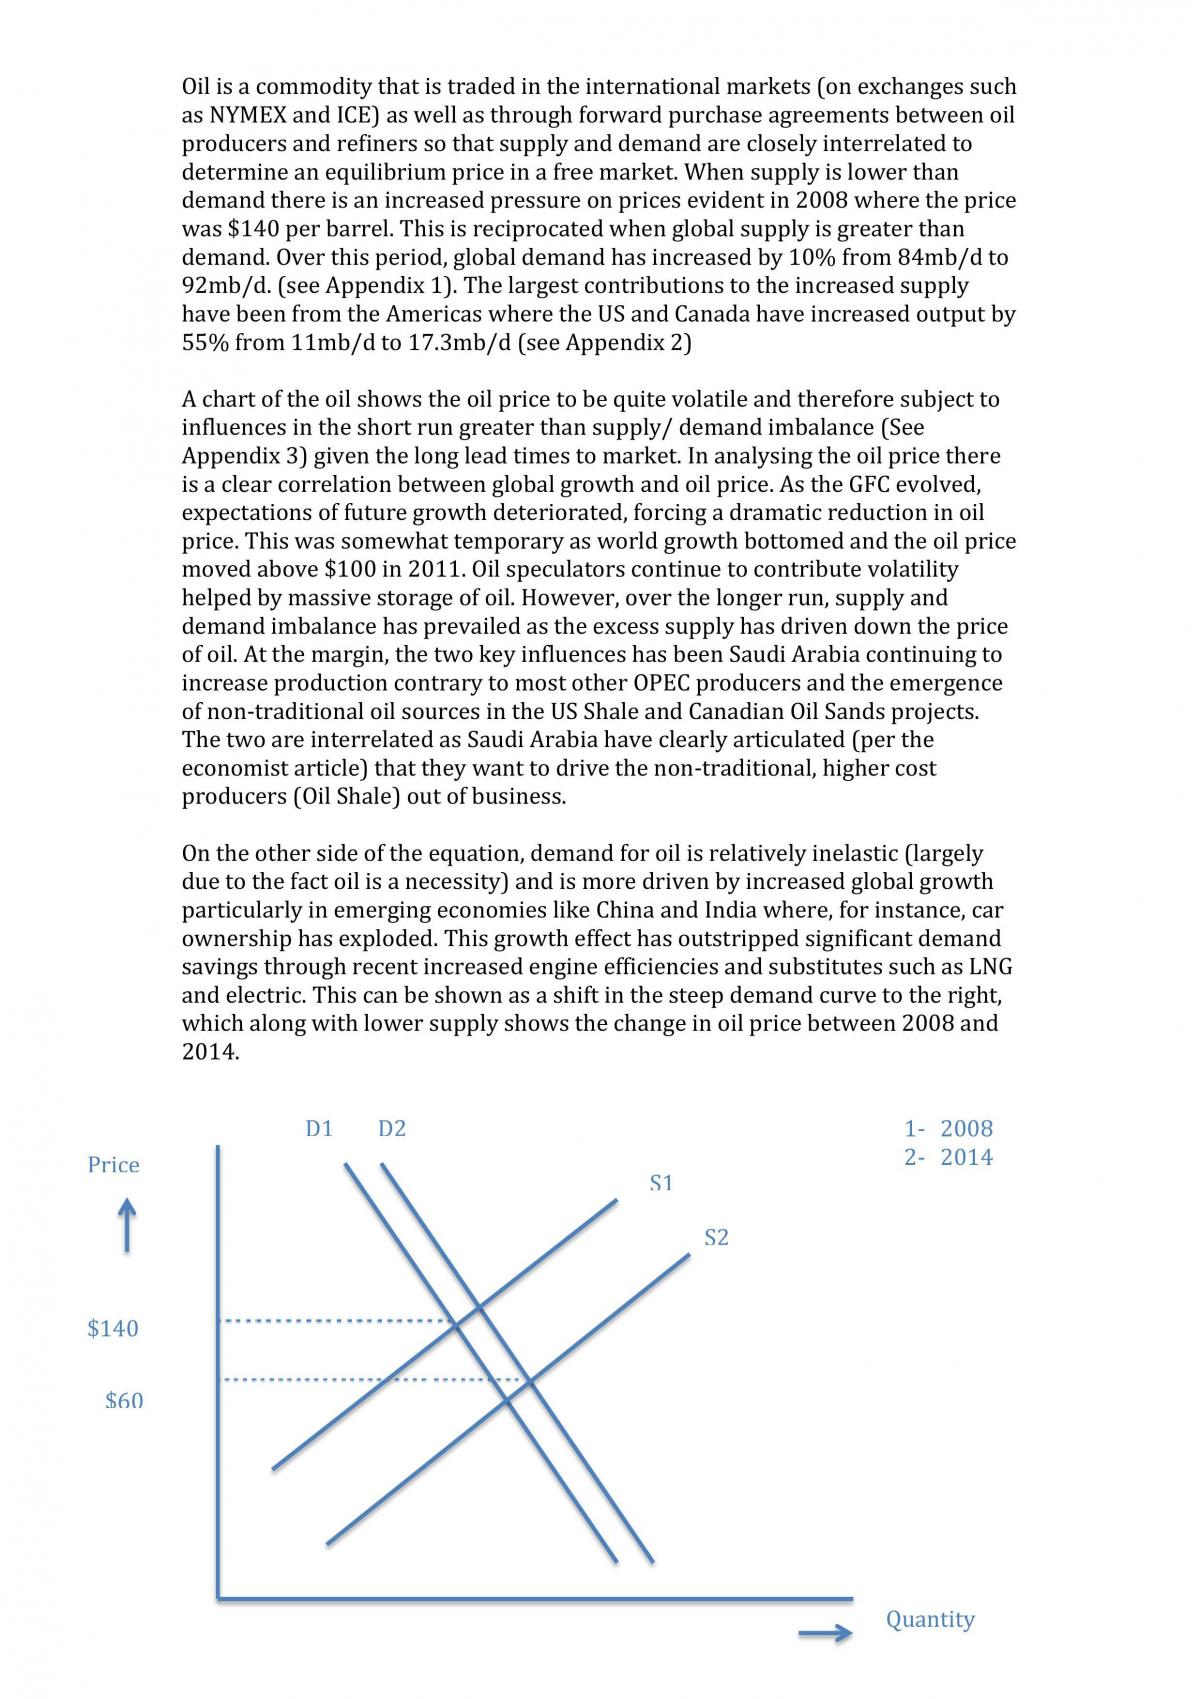 microeconomics case study pdf